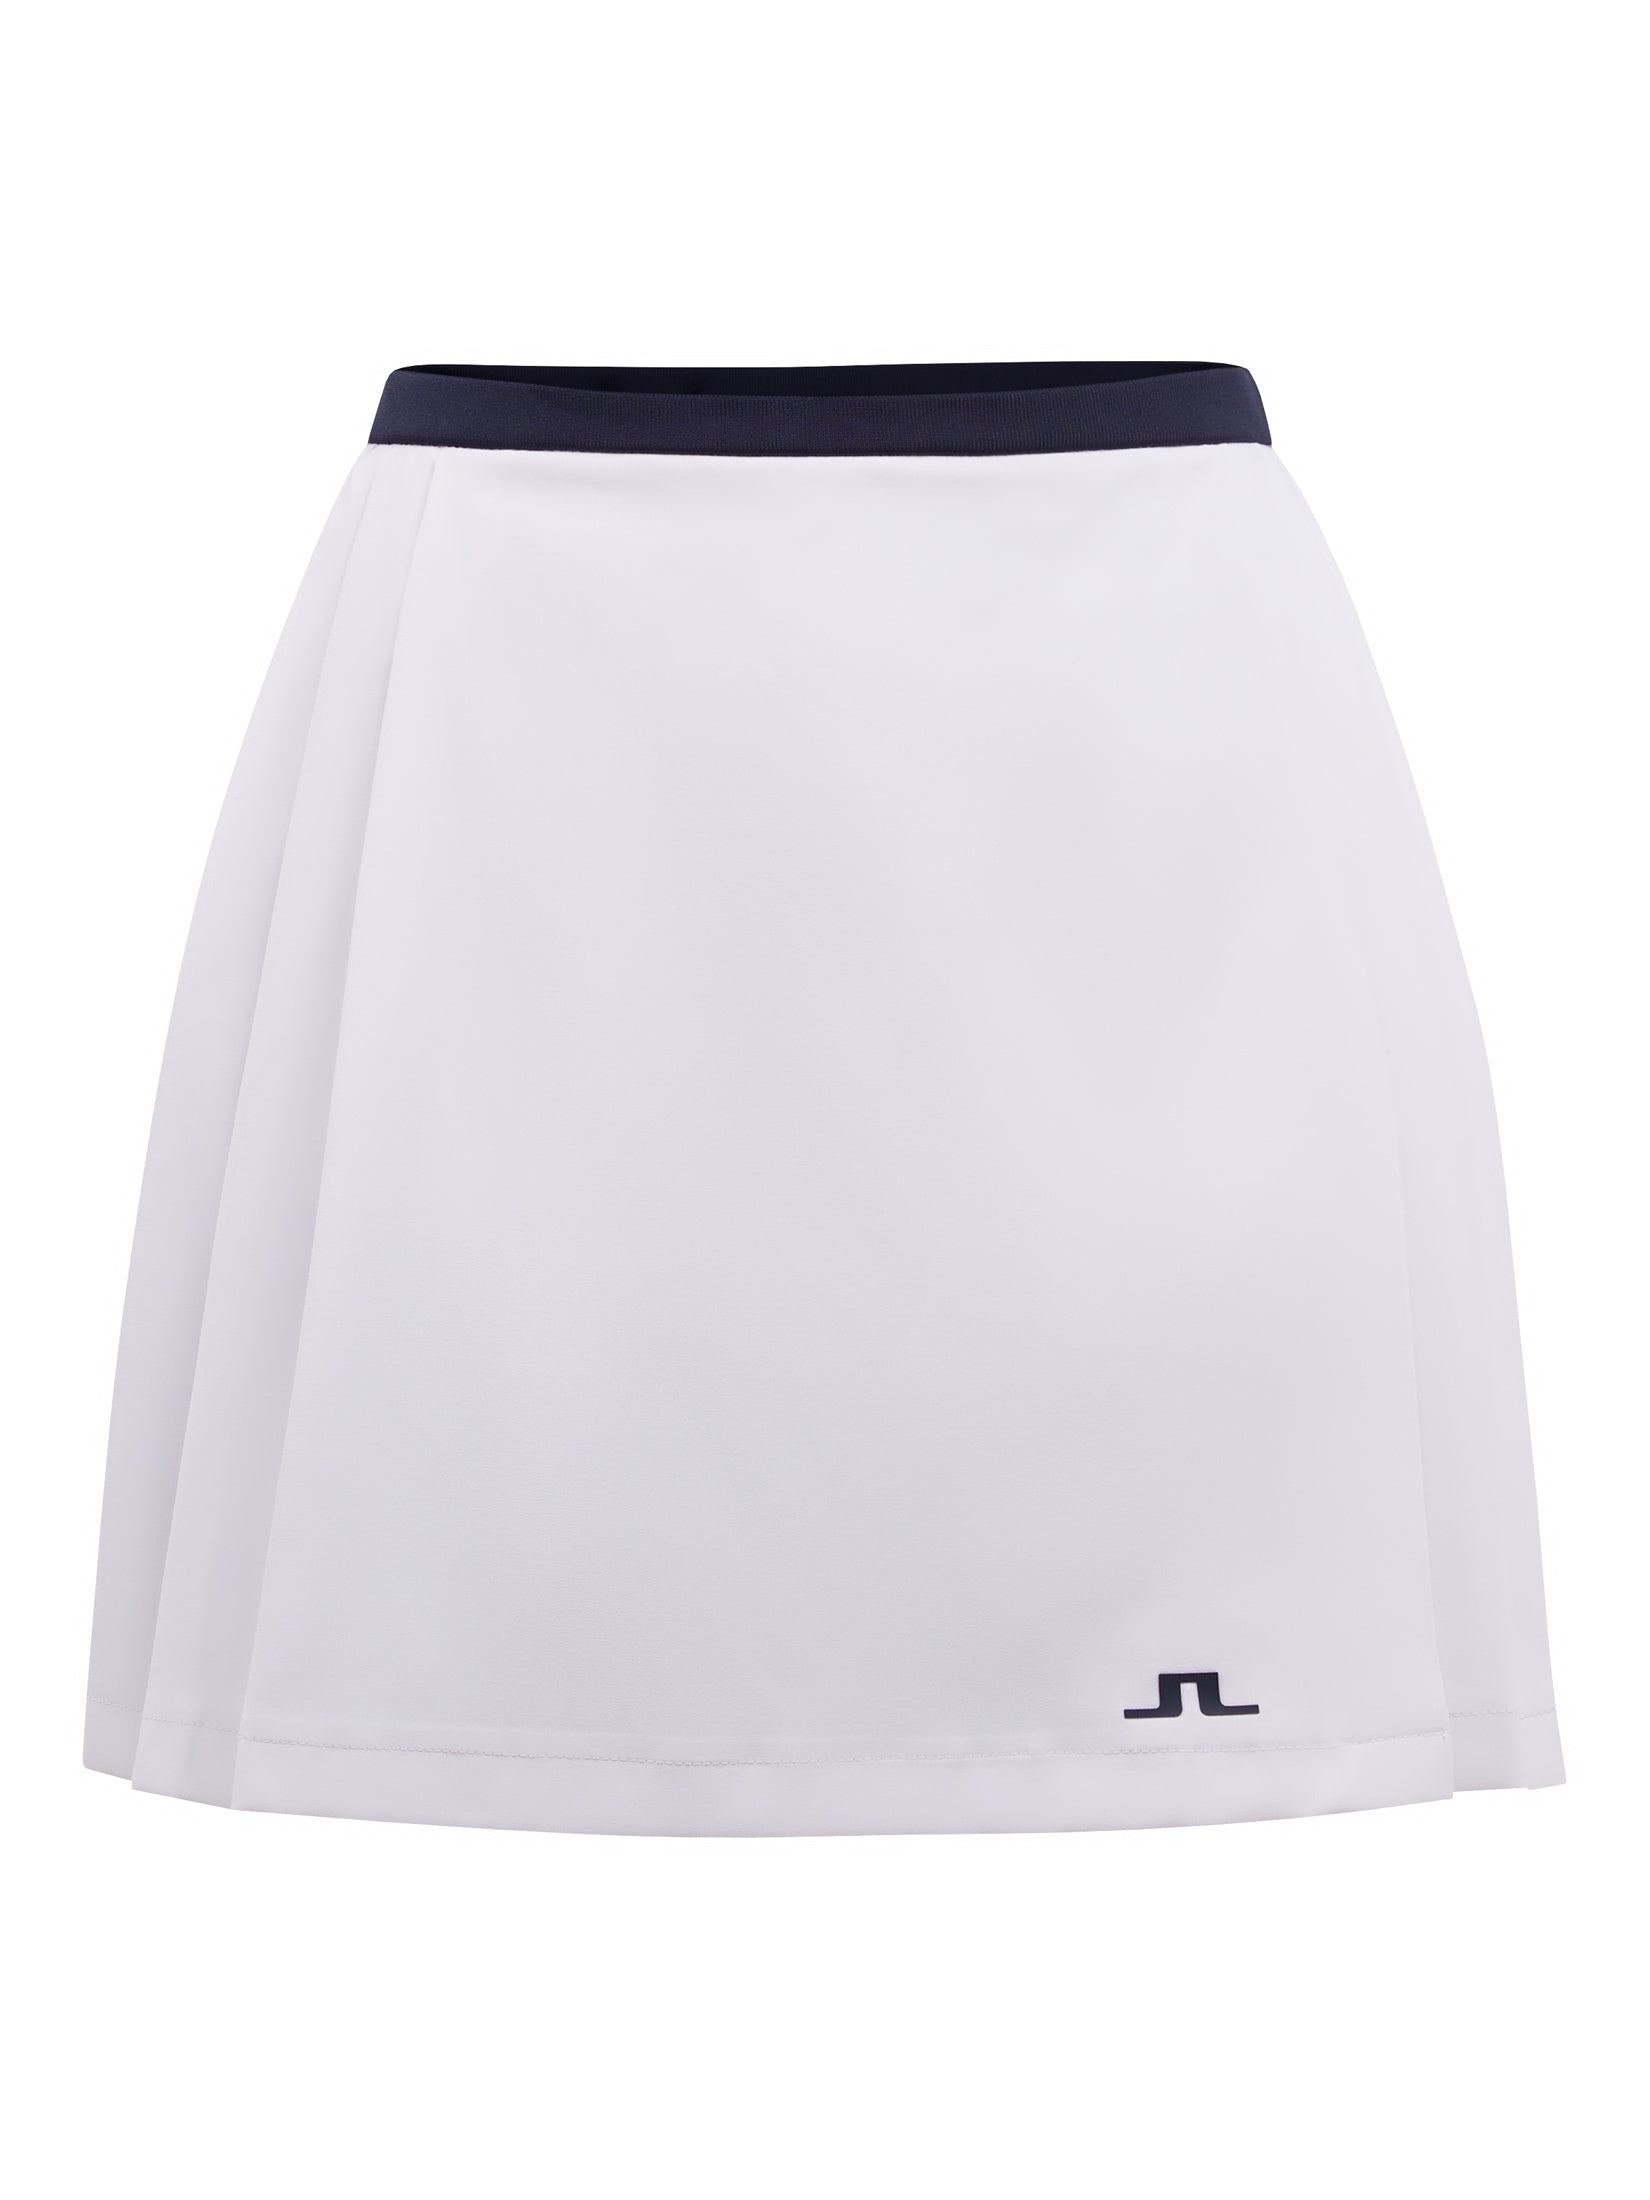 Sierra Pleat Skirt